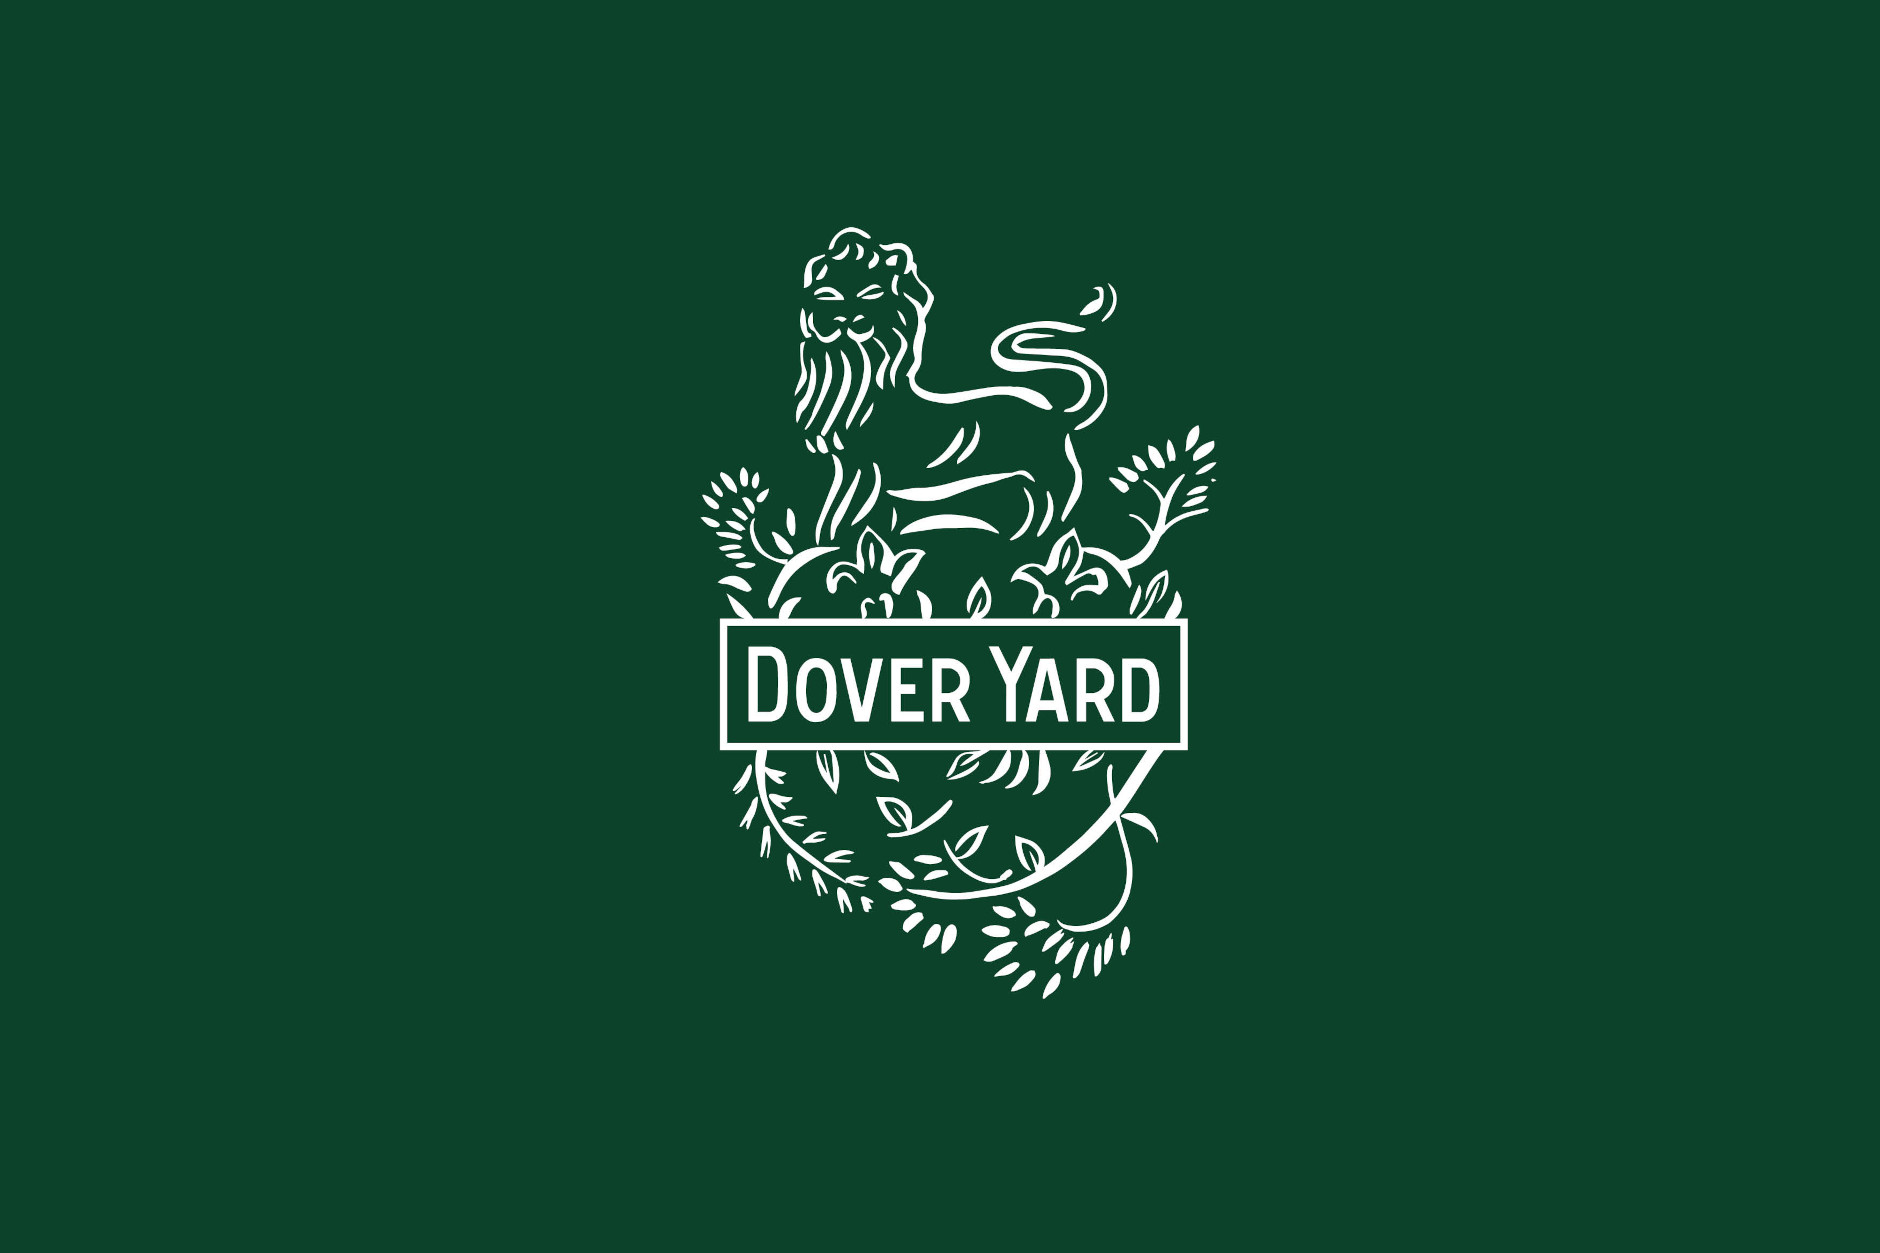 1Hotel-Mayfair_Dover-Yard